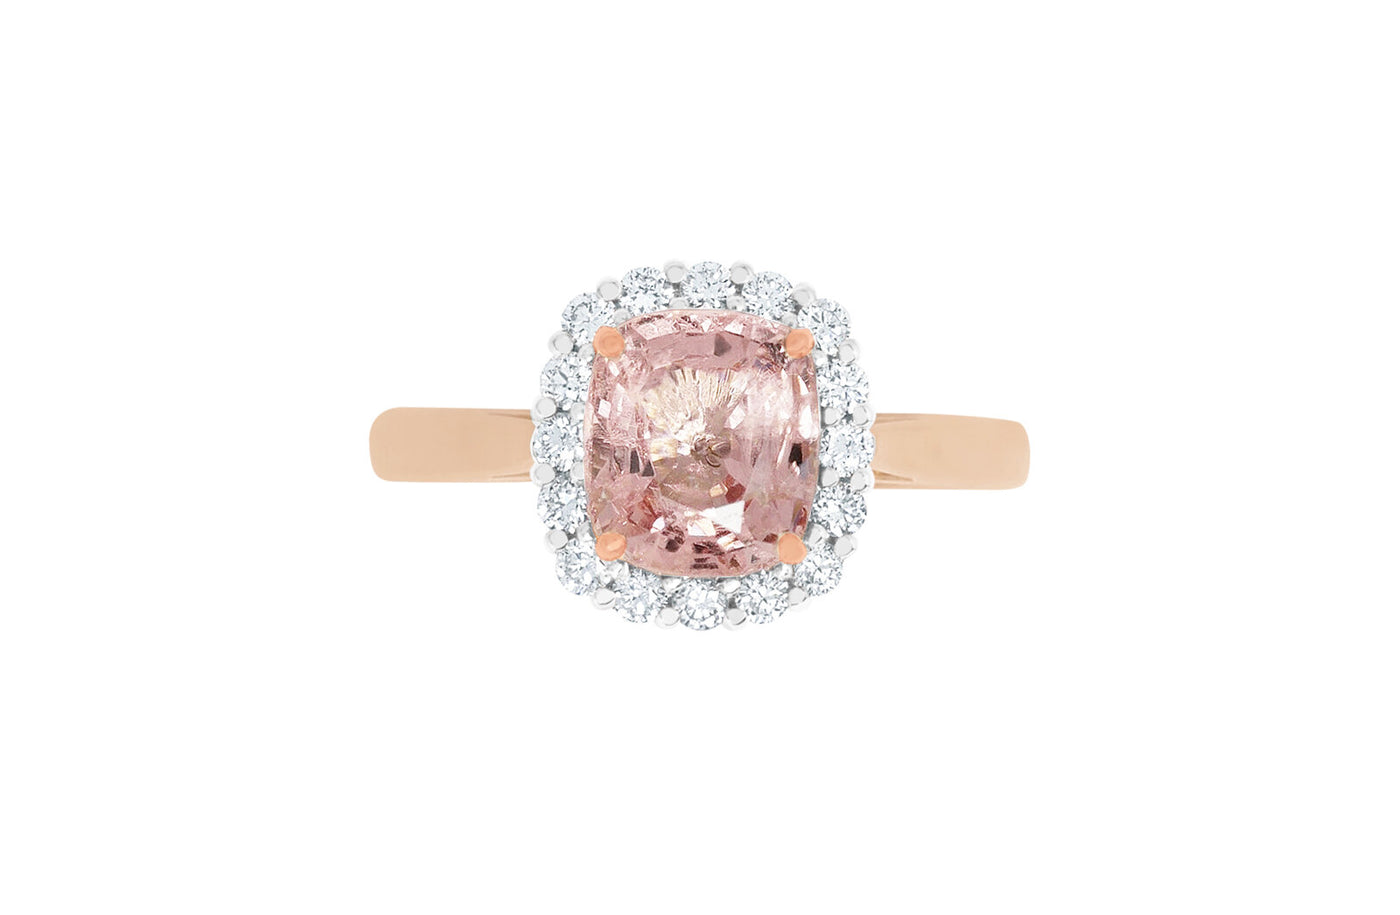 Peony: Peach Pink Spinel Diamond Halo Ring